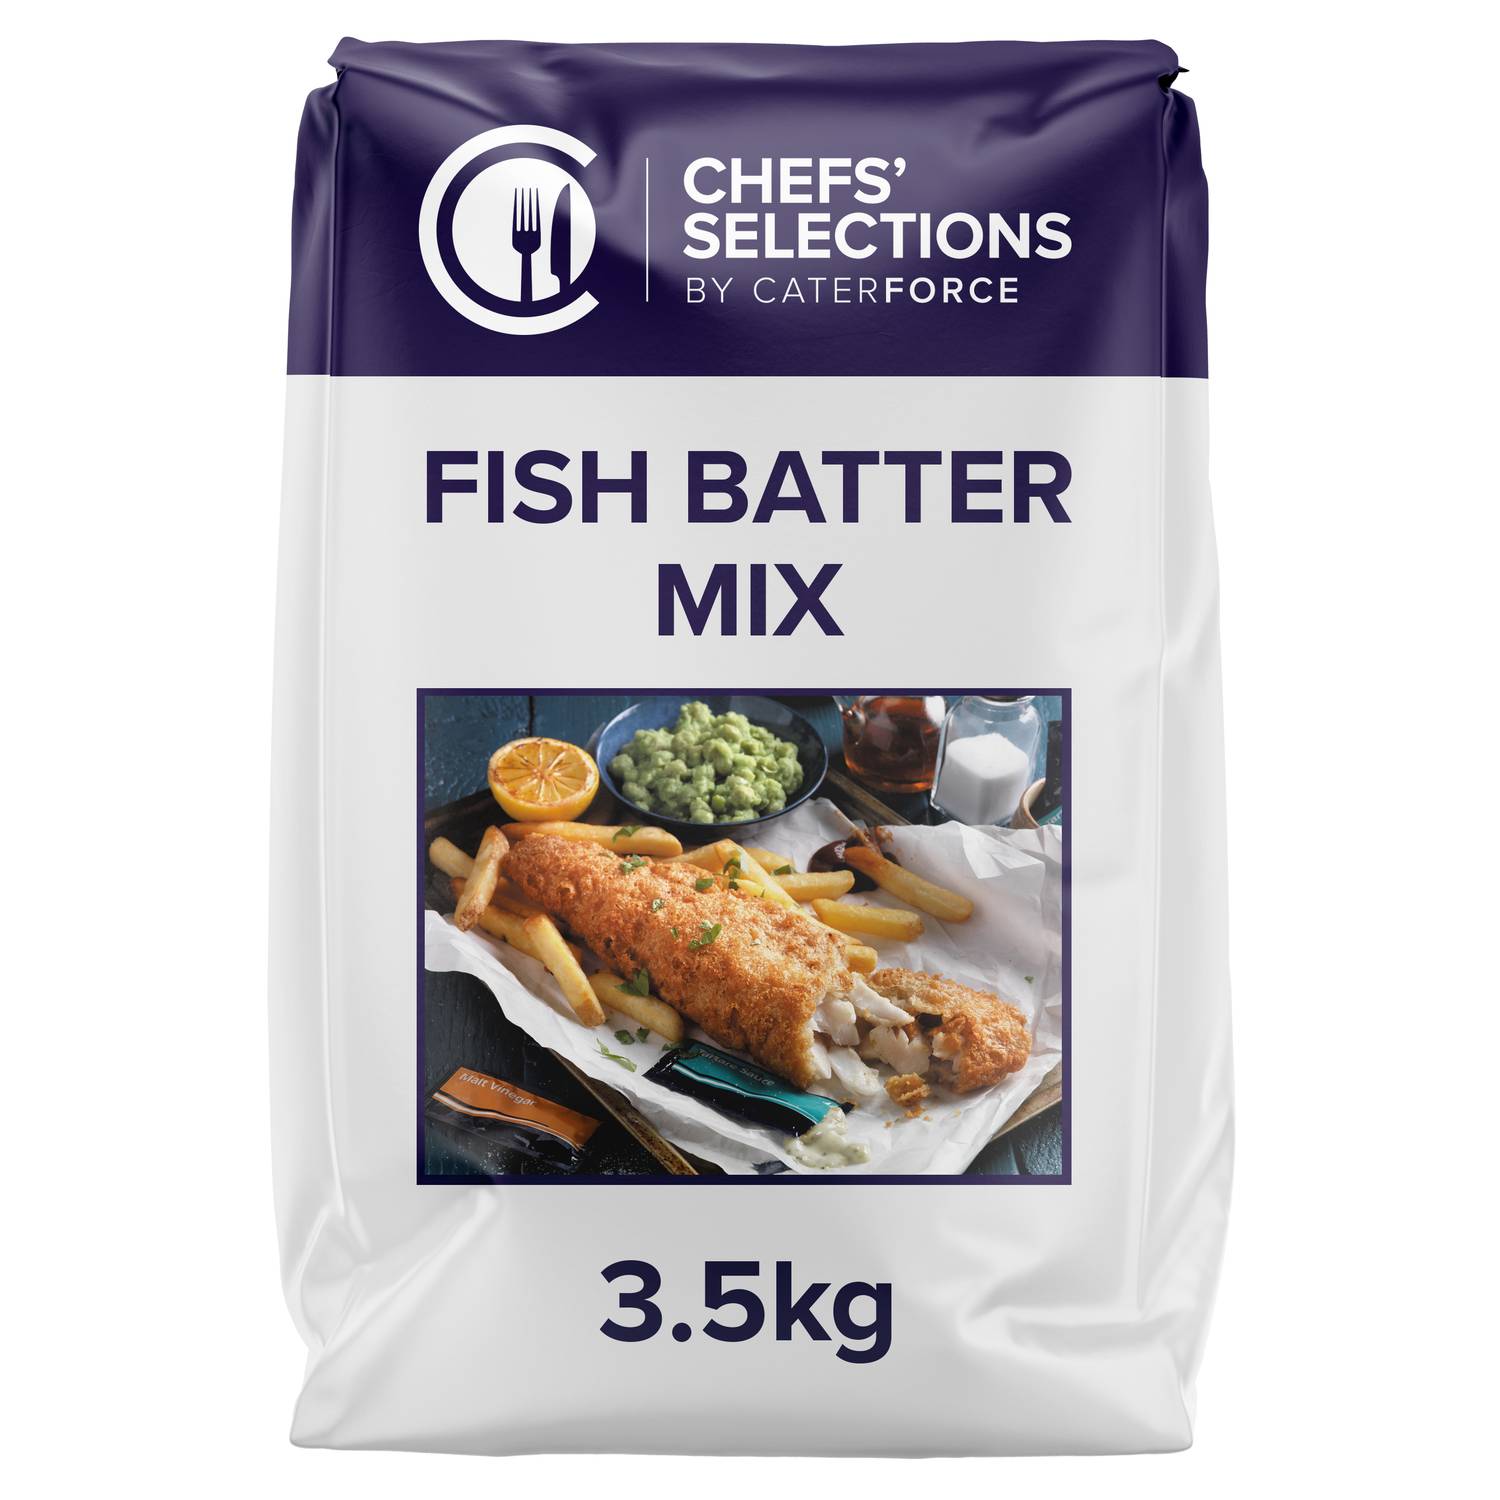 Chefs’ Selections Fish Batter Mix (4 x 3.5kg)